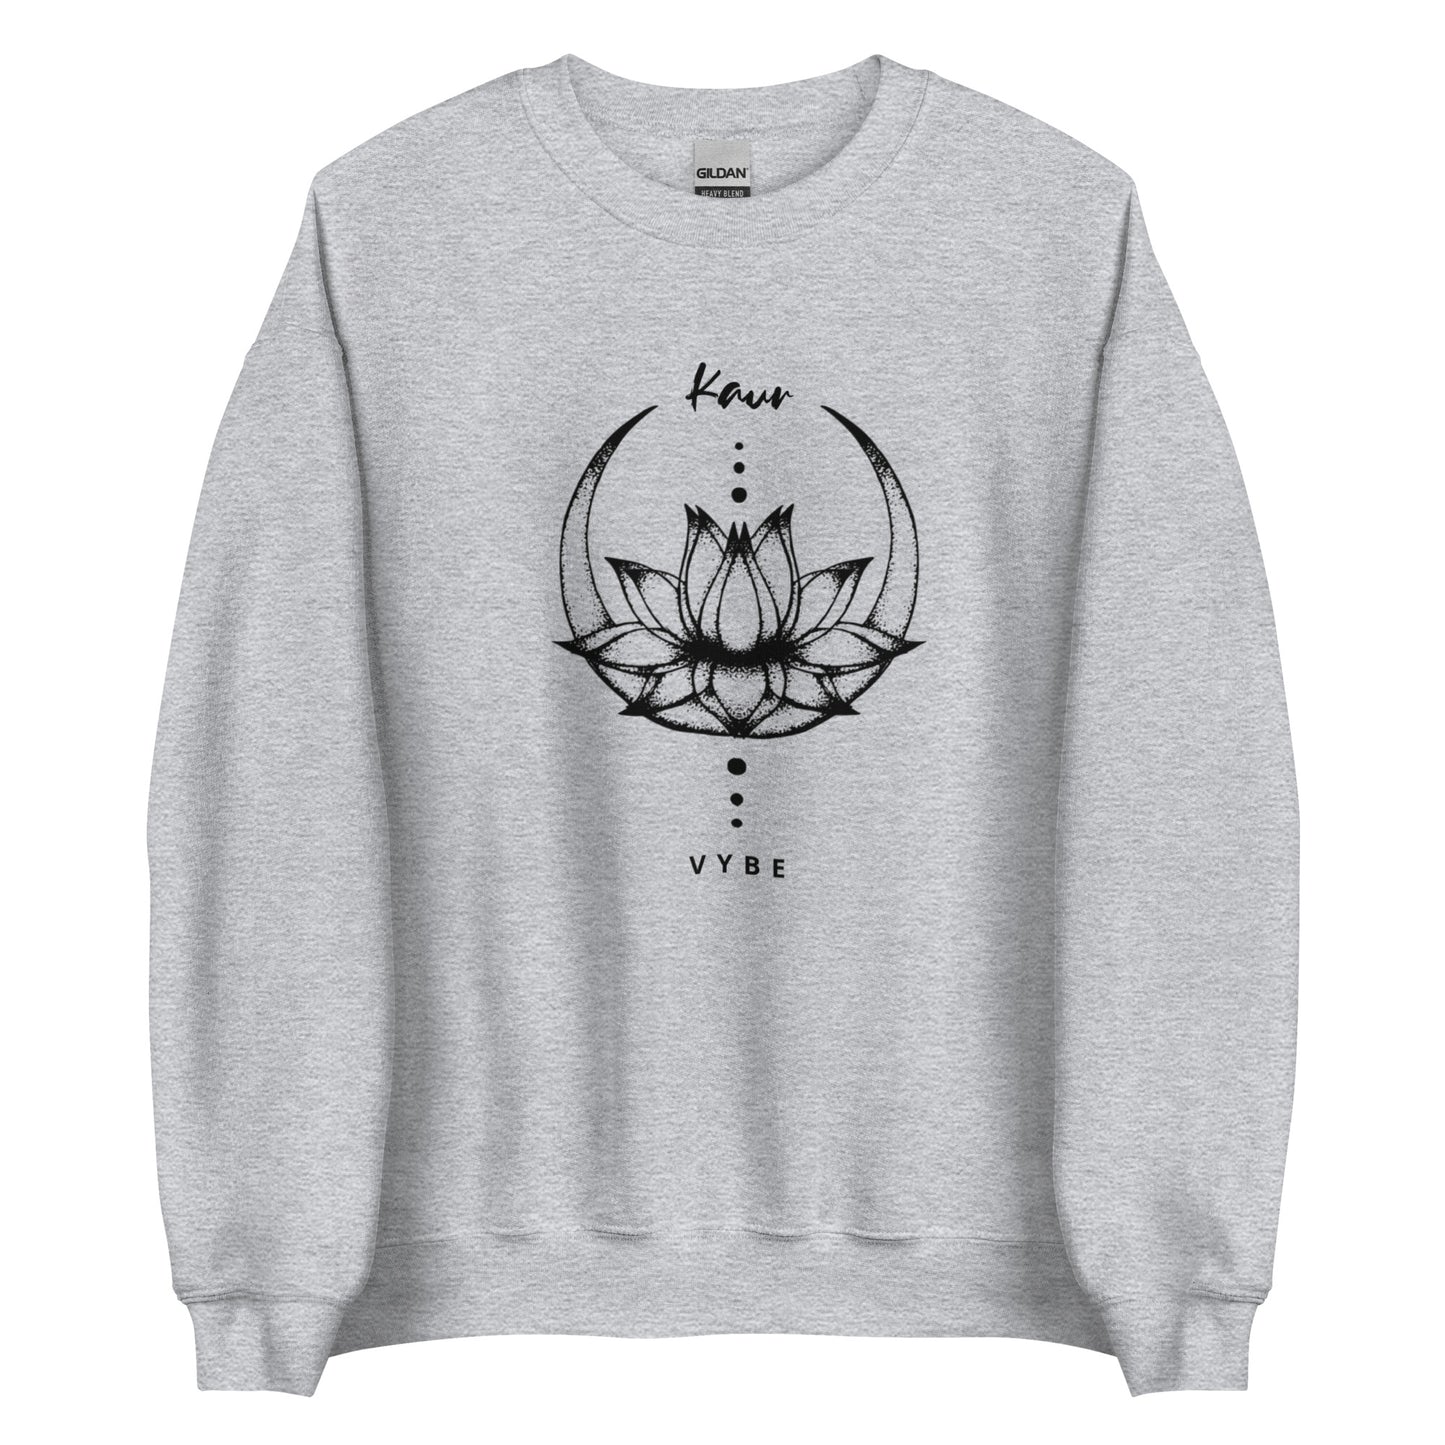 Kaur Vybe - Grey Crewneck Sweatshirt